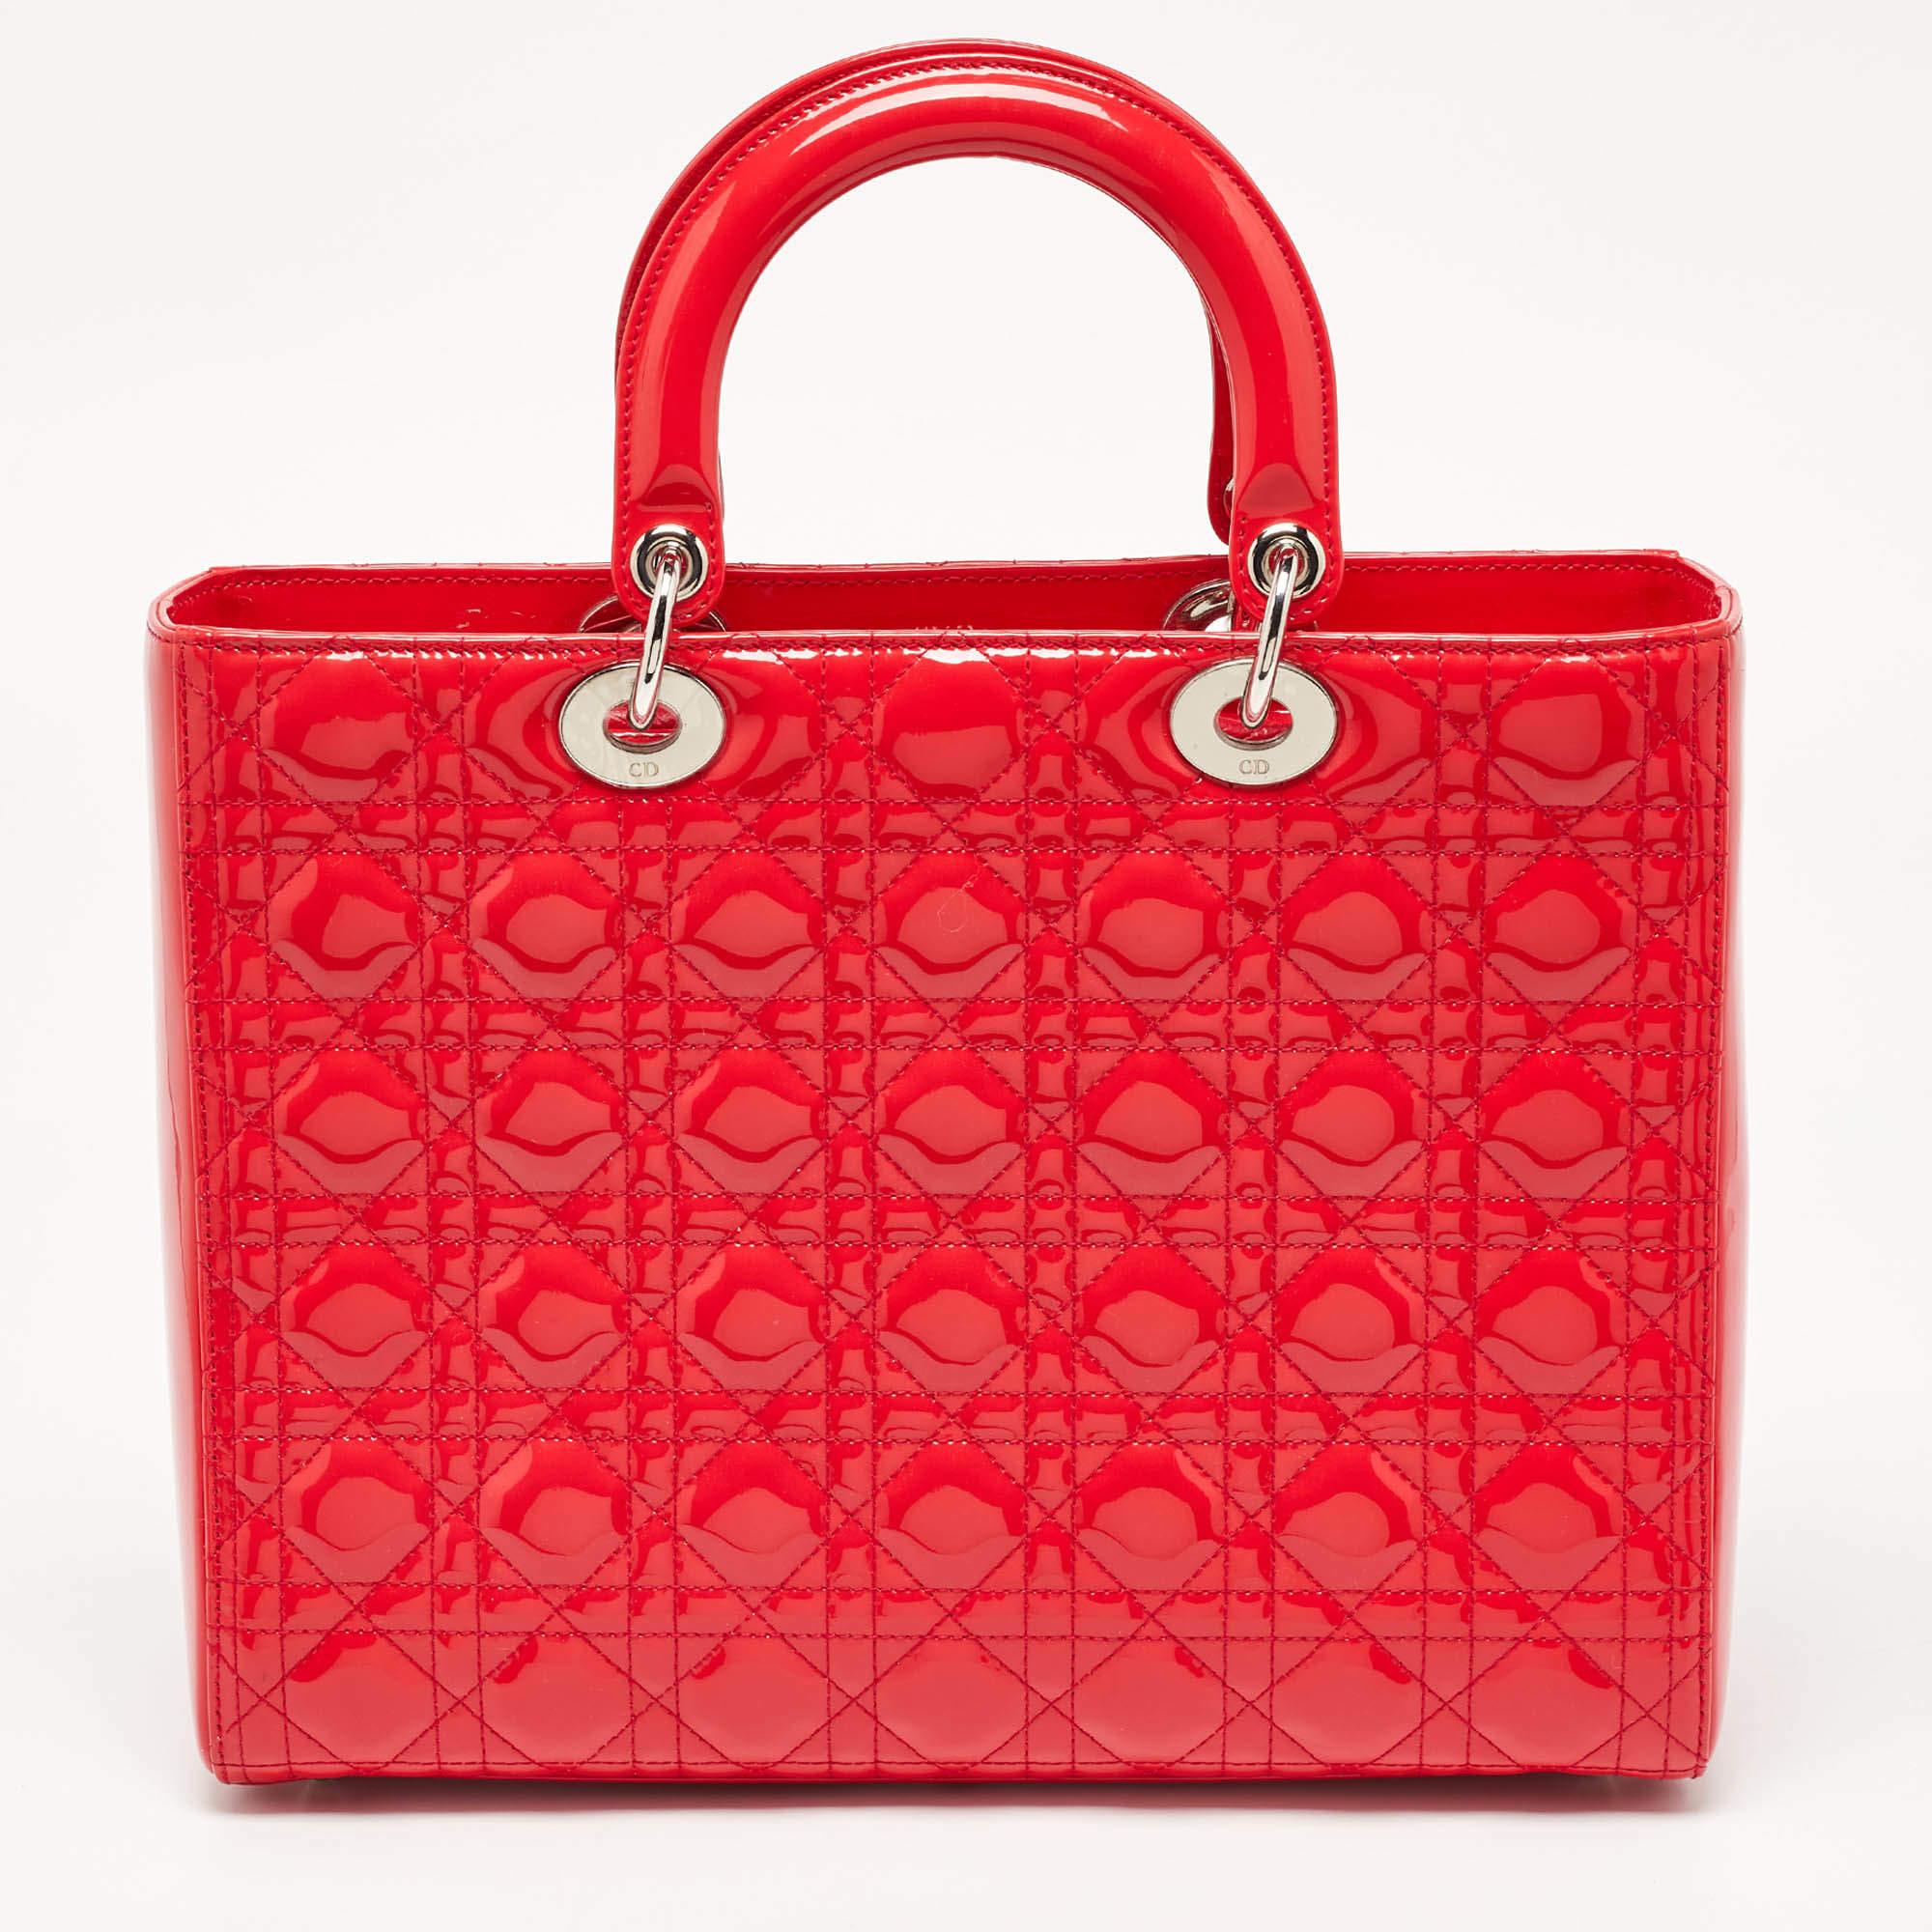  Dior - Grand sac cabas Lady Dior en cuir verni rouge cannage Pour femmes 